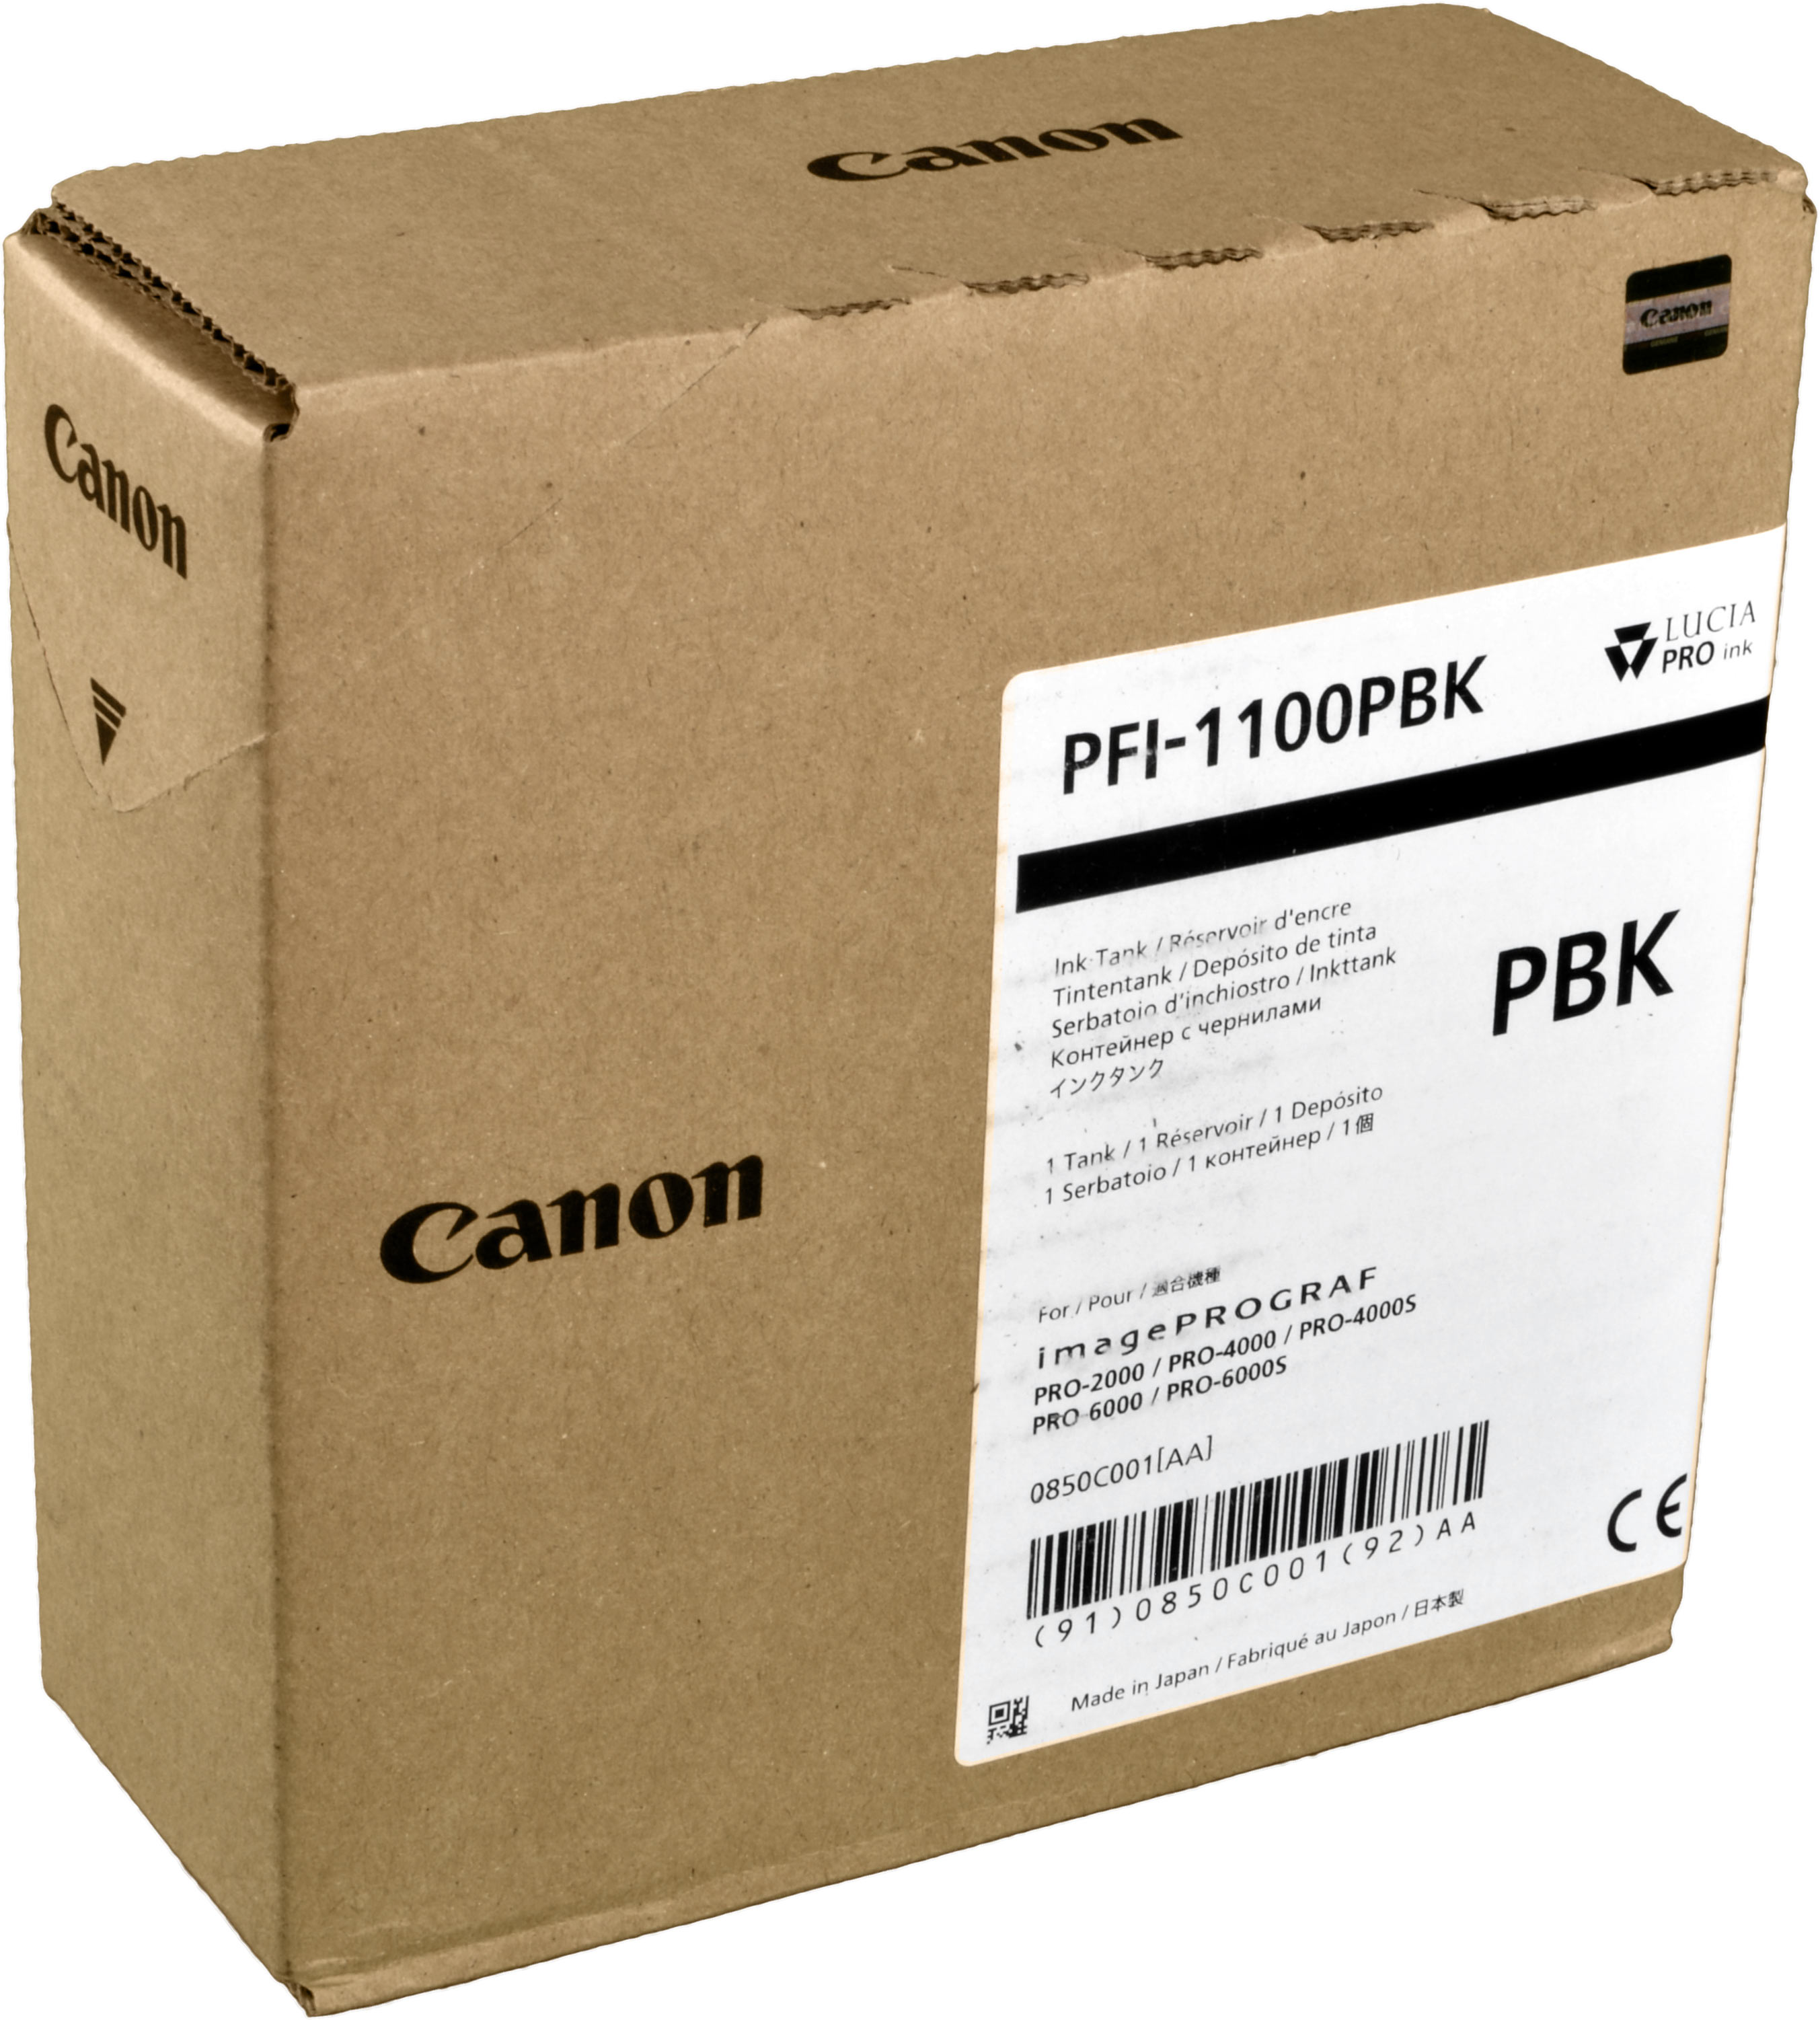 Canon Tinte 0850C001  PFI-1100PBK  photo black